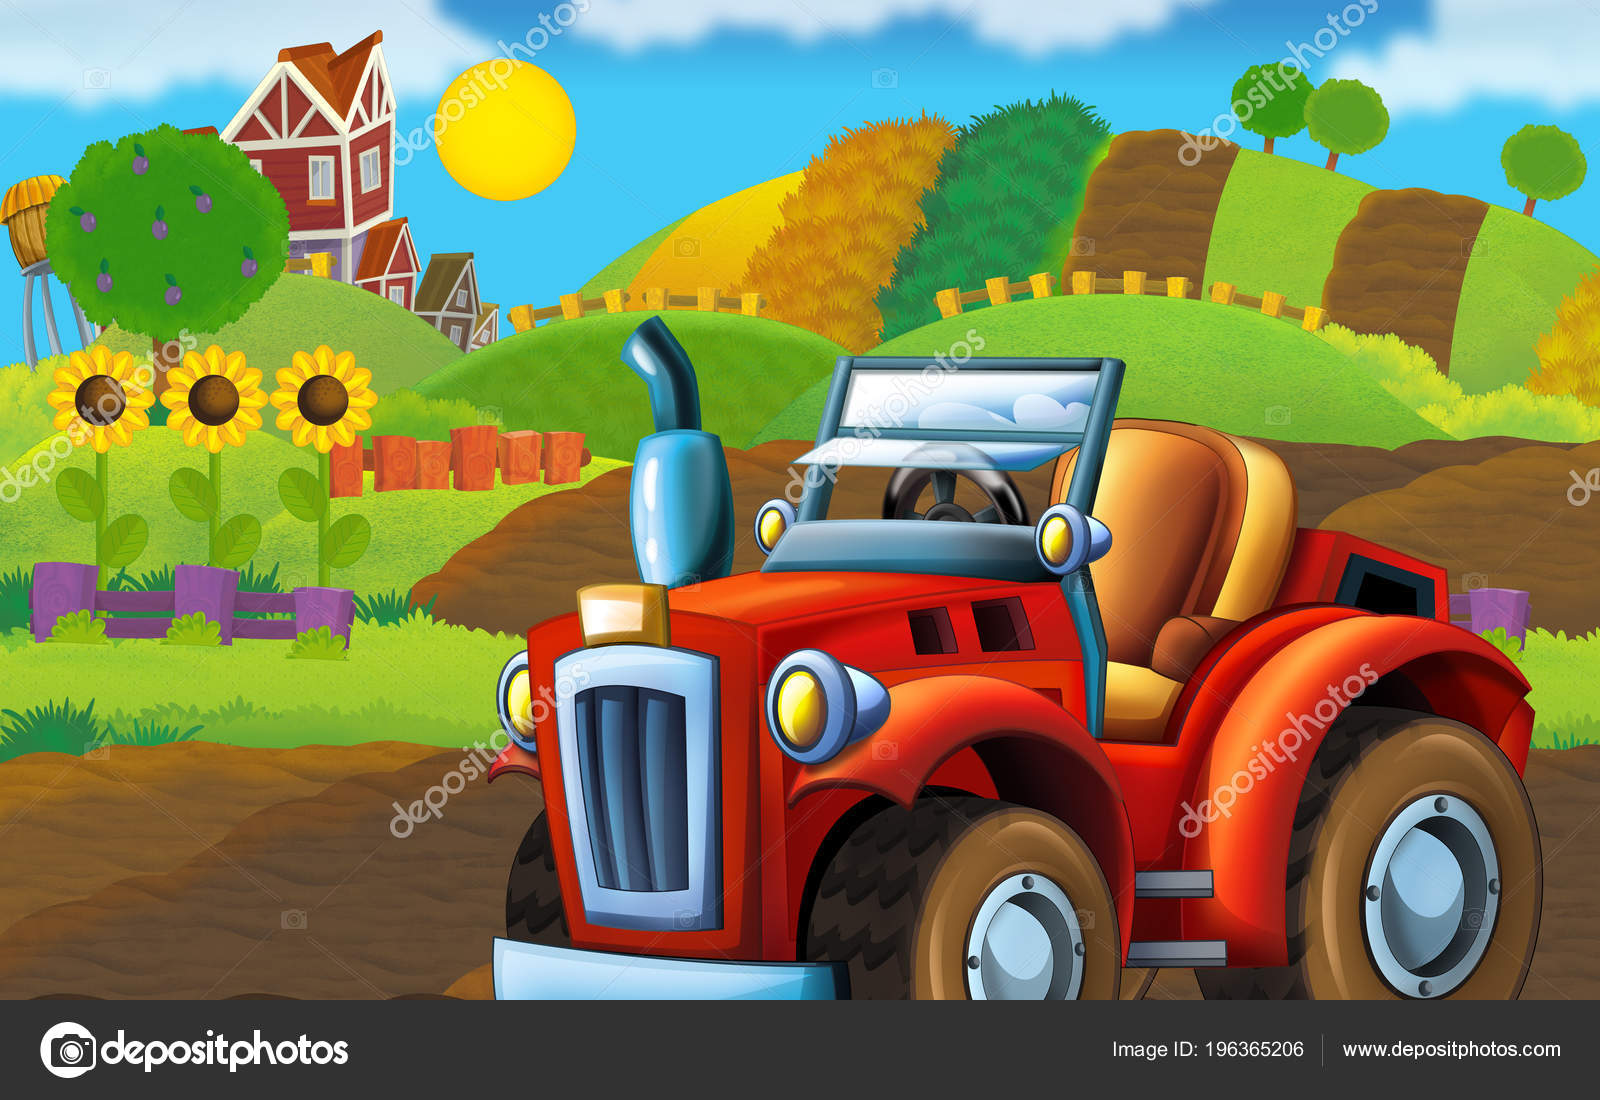 Cartoon Happy Sunny Farm Scene Tractor Different Tasks Illustration  Children Stock Photo by ©illustrator_hft 196365206